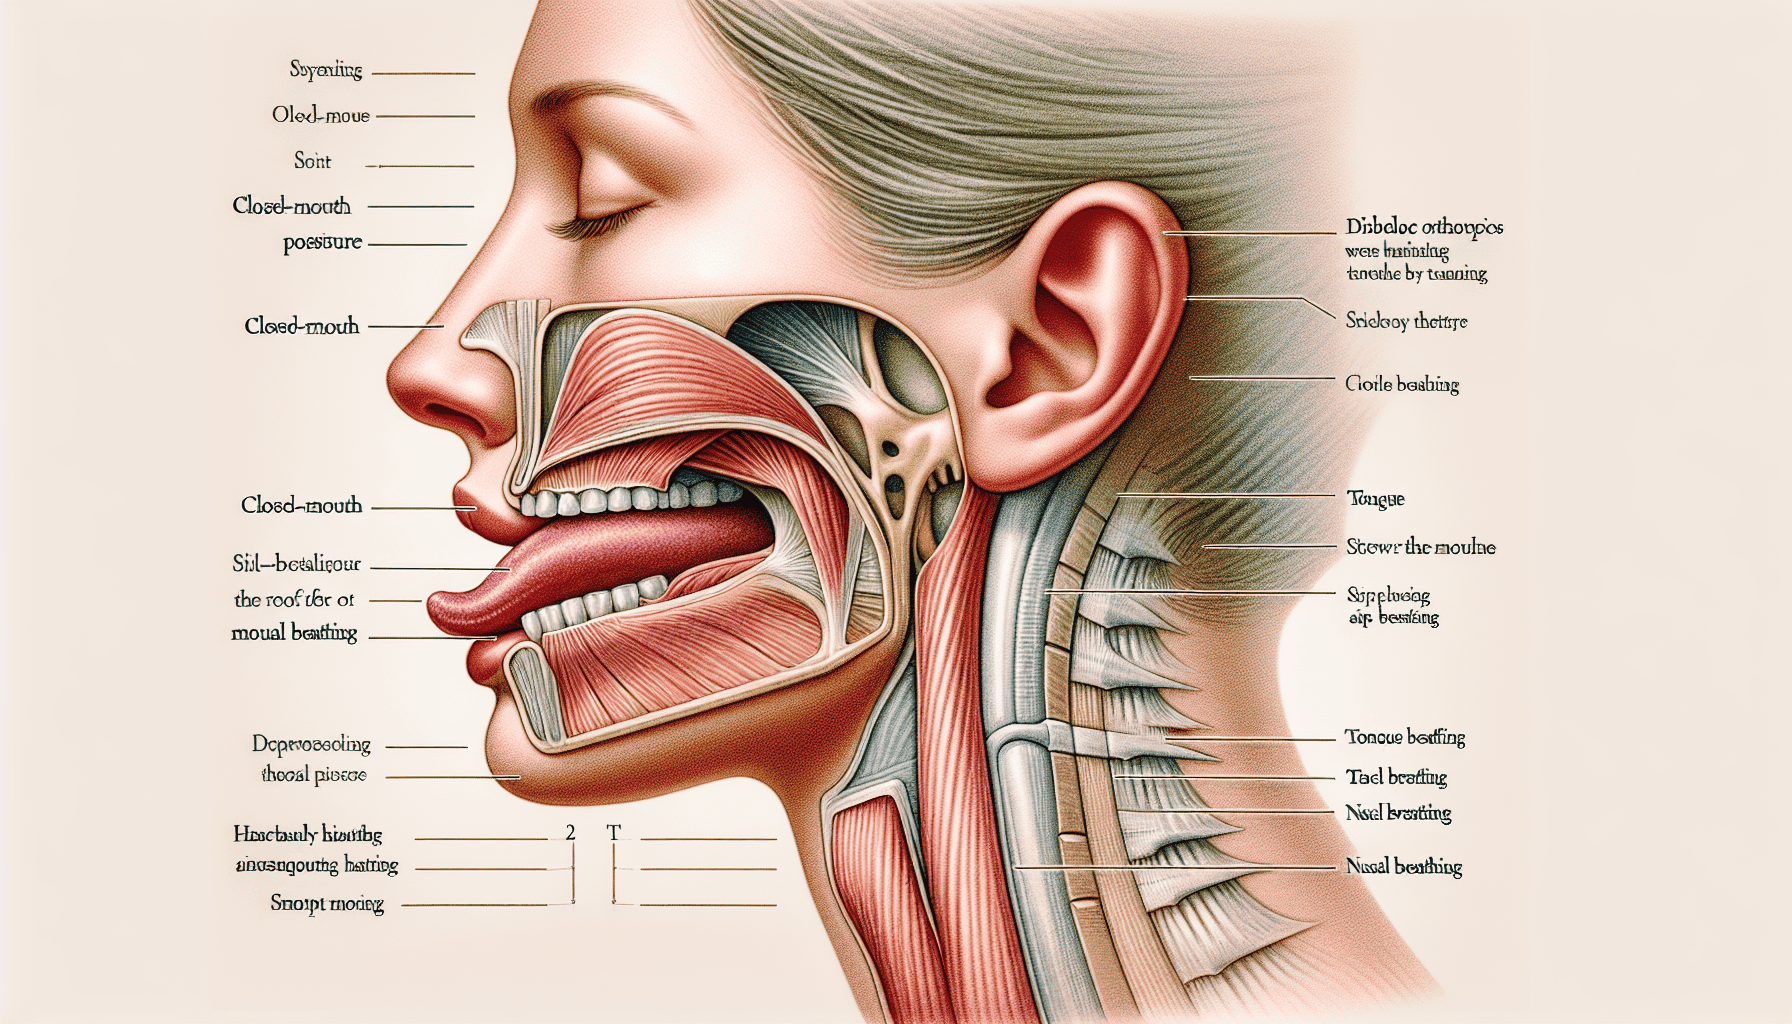 Illustration of proper oral habits and mouth posture